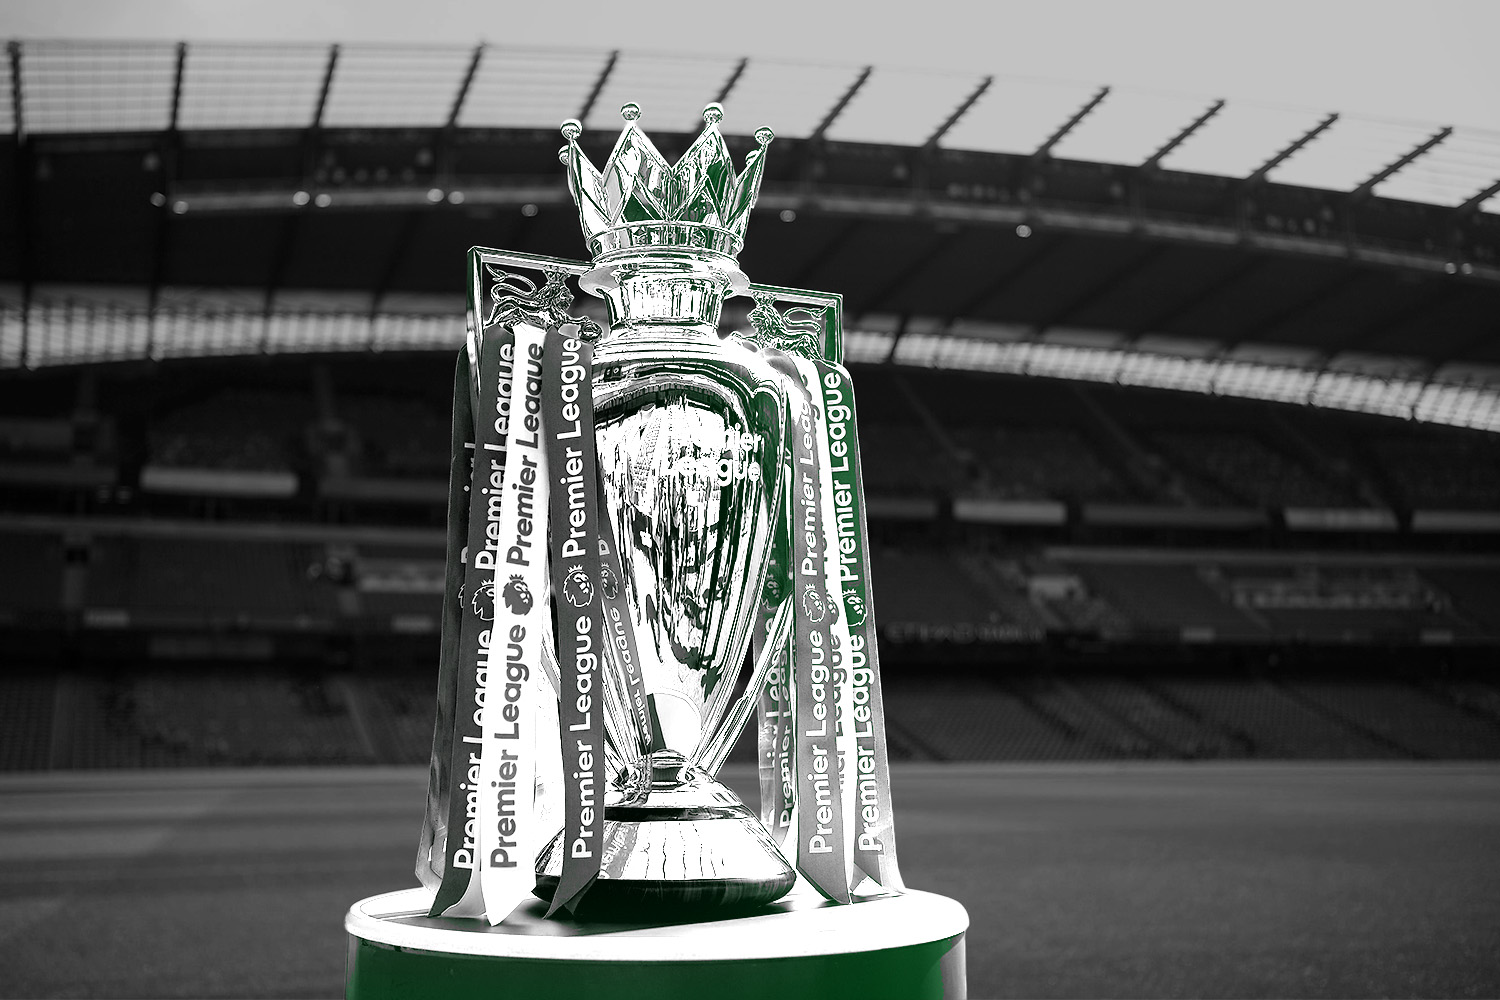 premier_league_logo_on_trophy